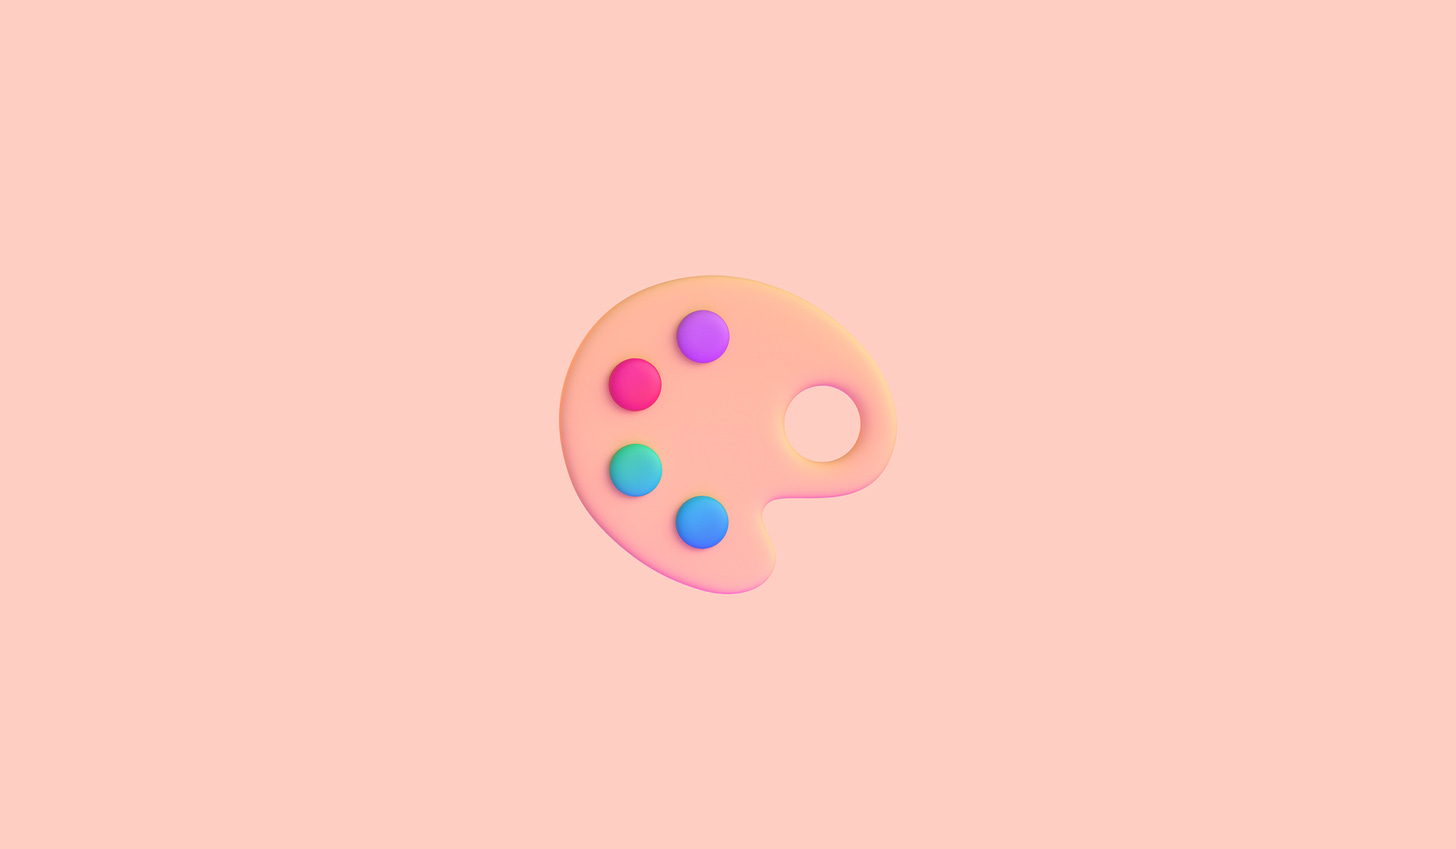 art palette emoji on a light pink background